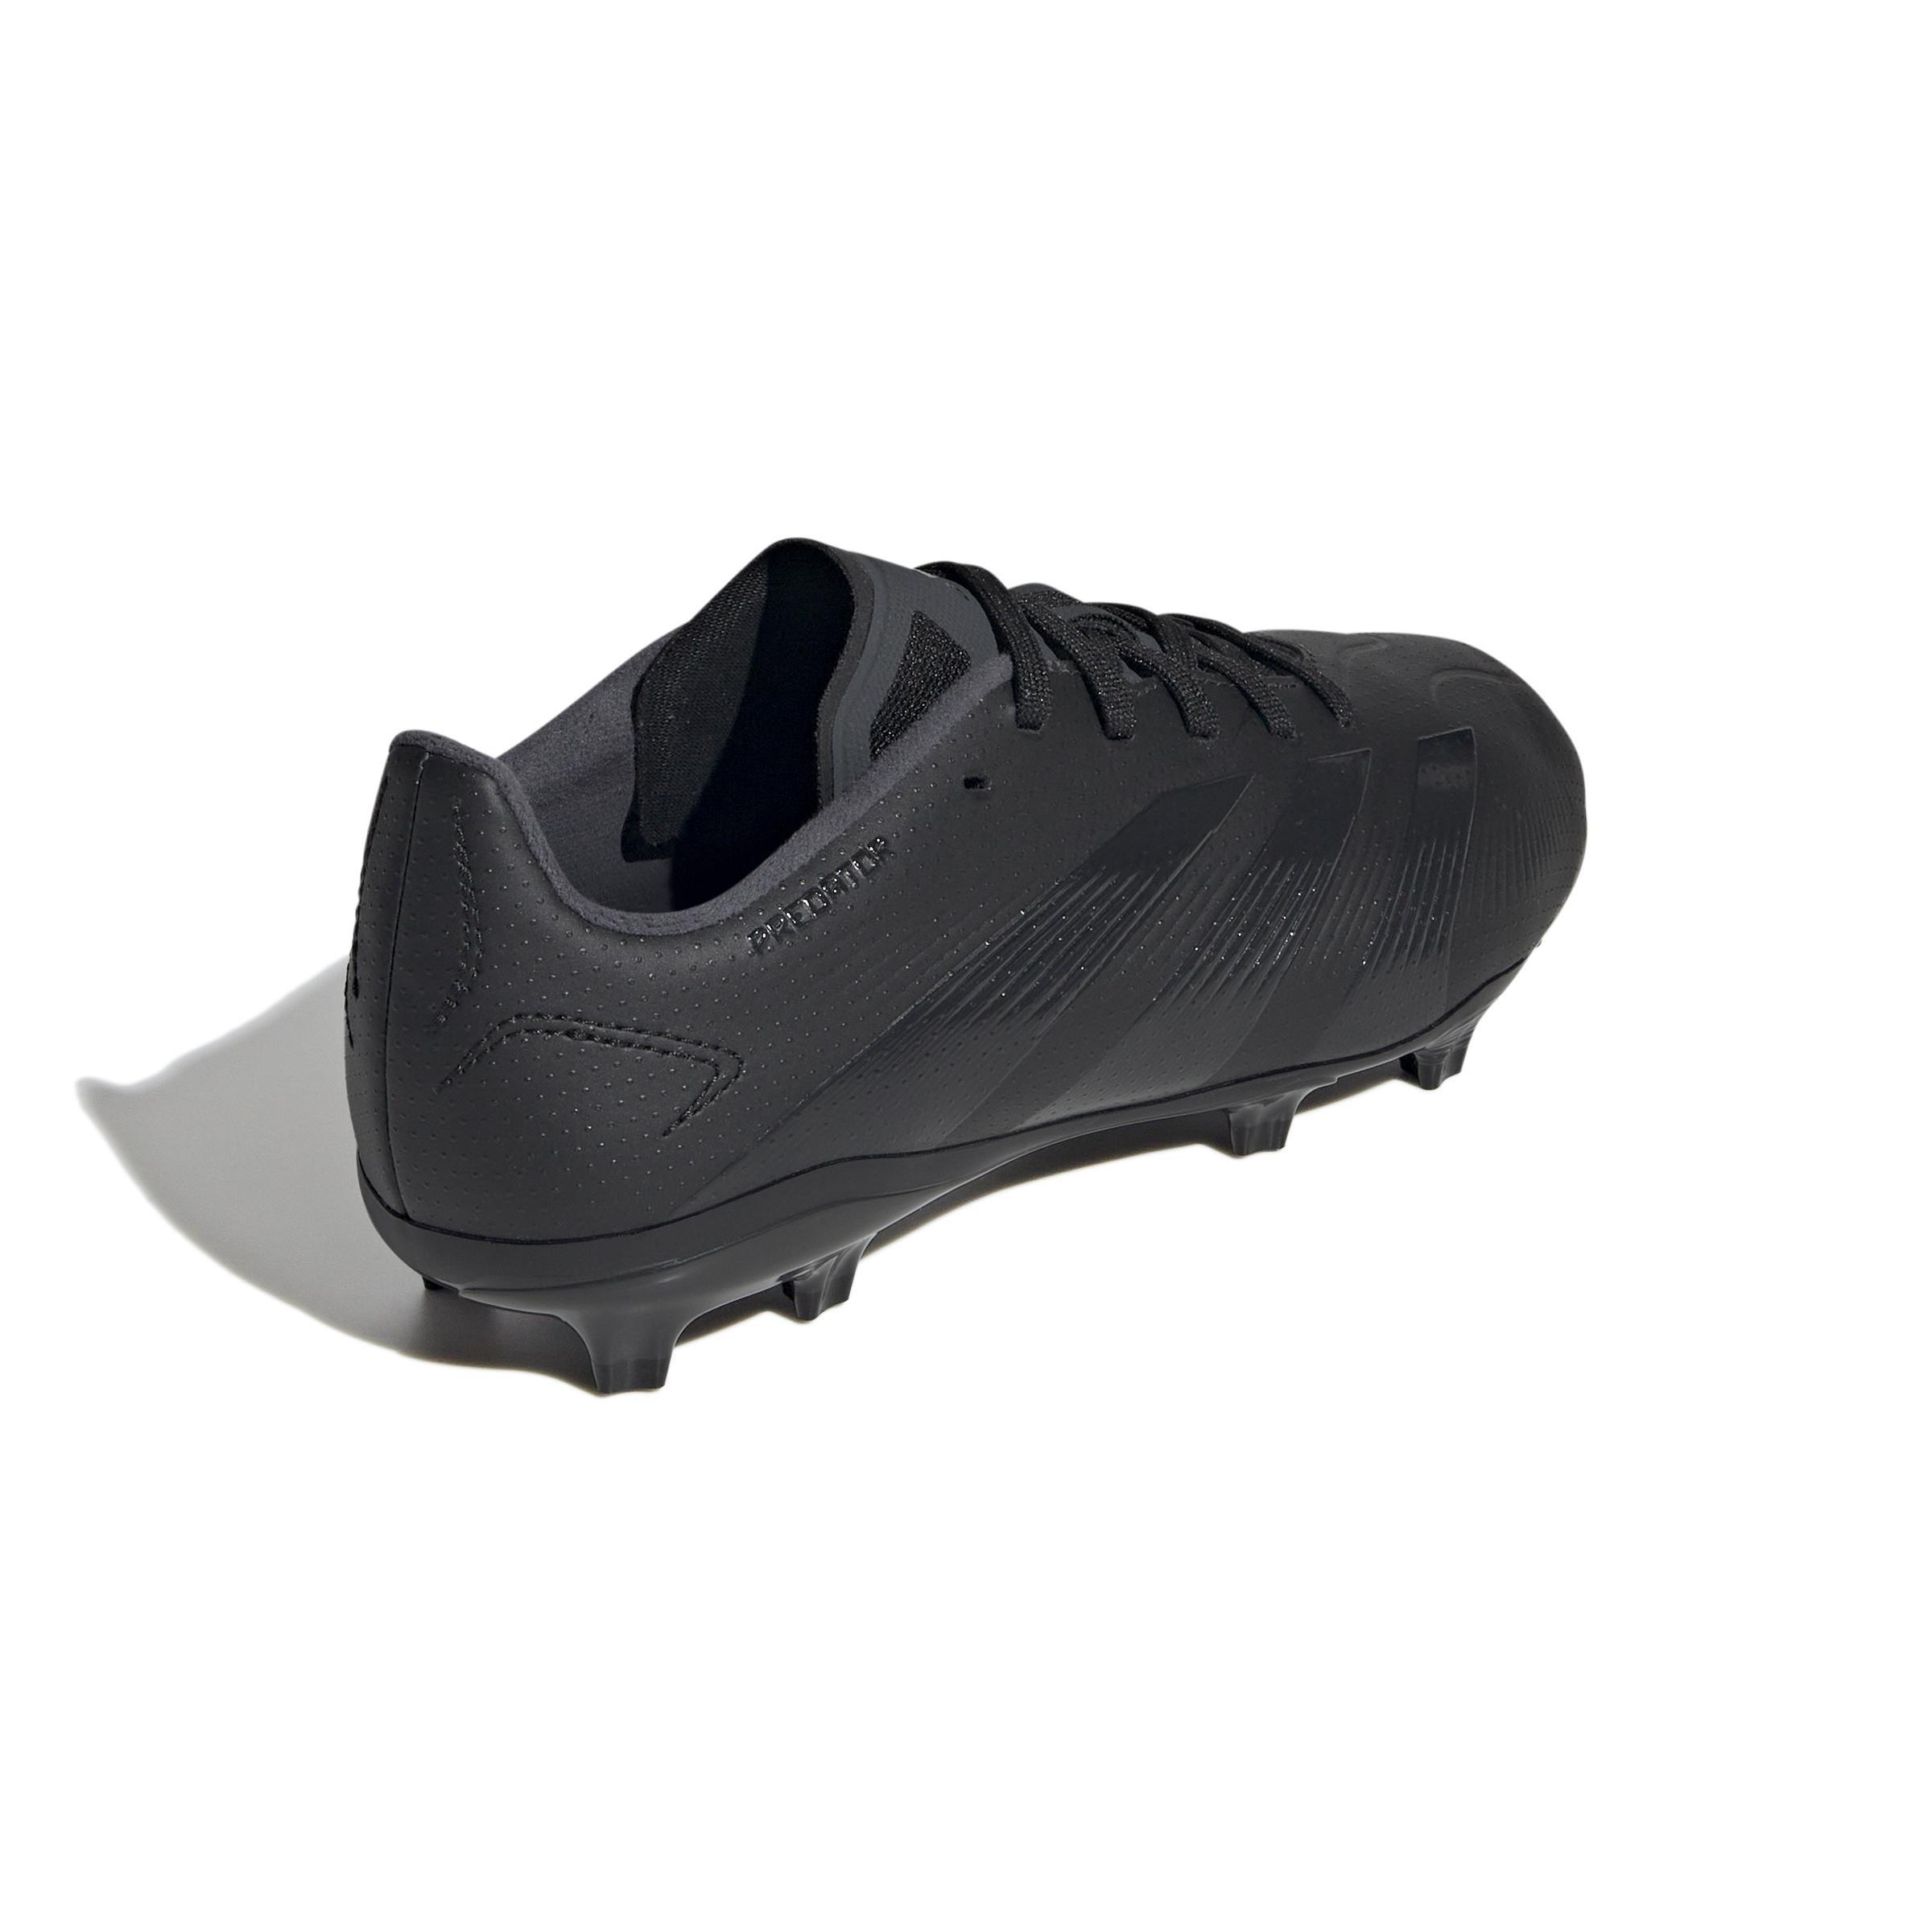 adidas - Unisex Kids Predator League Firm Ground Football Boots, Black